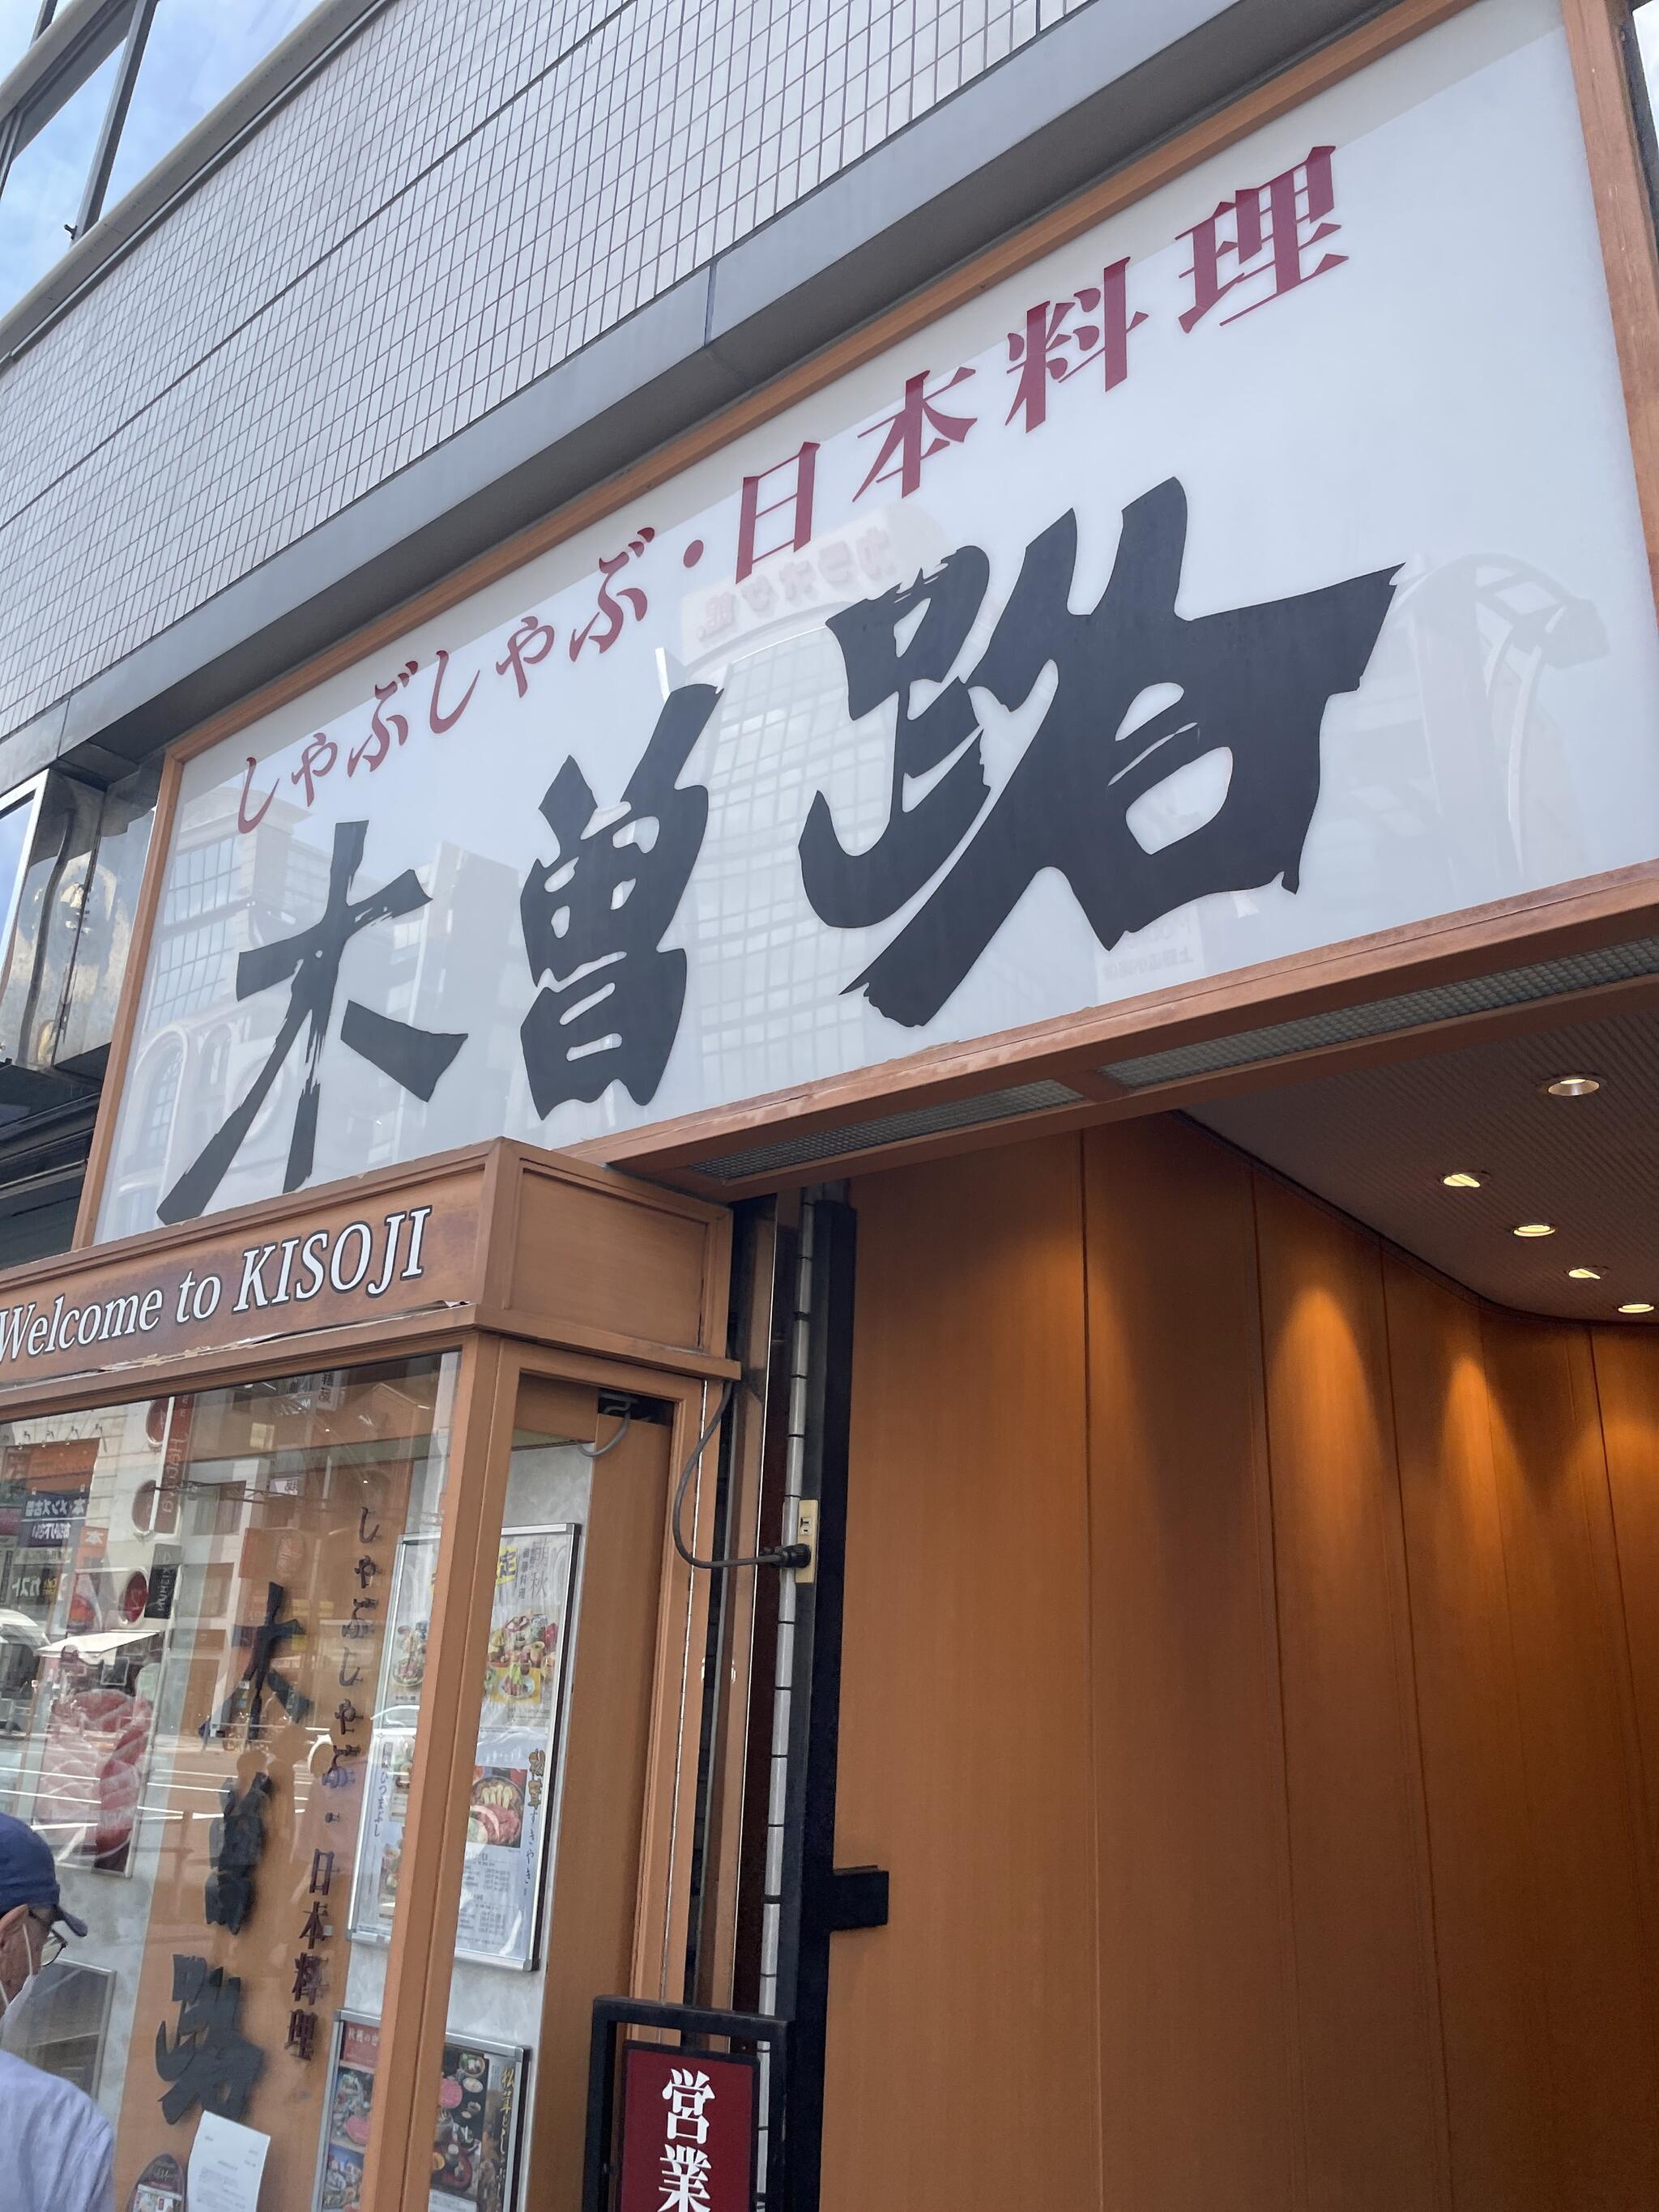 木曽路 上野店の代表写真7